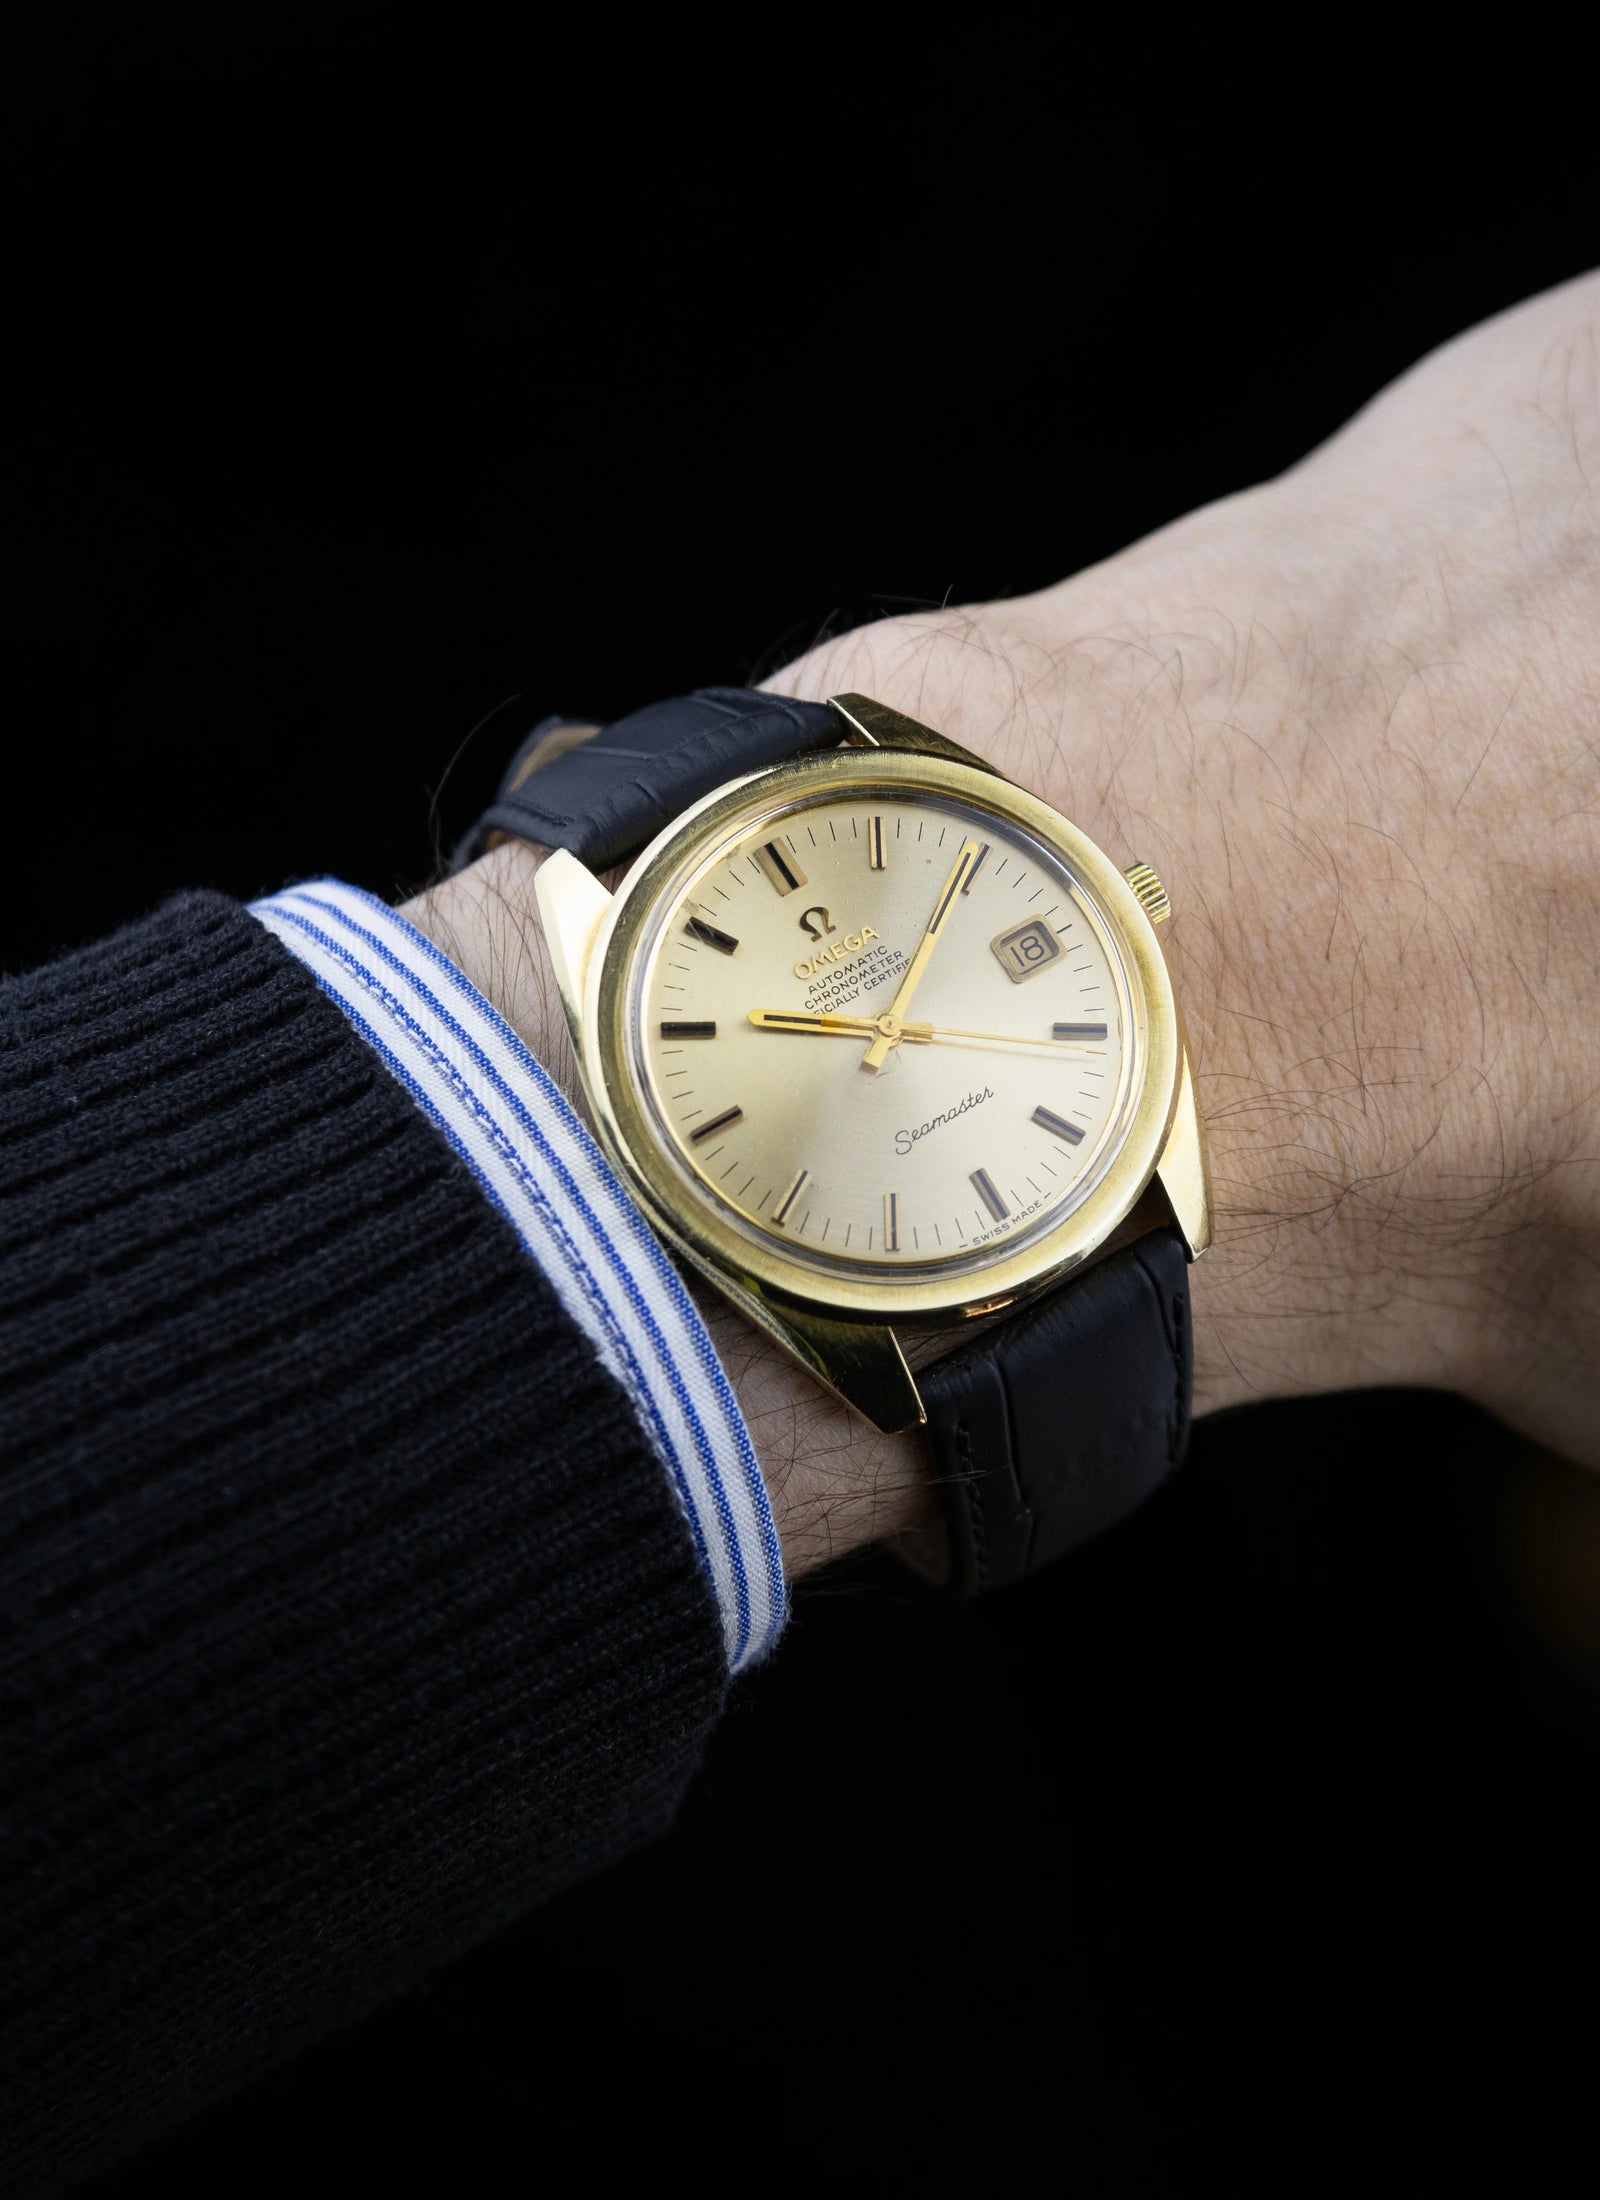 1967 Omega Seamaster Chronometer Goldcap 168.022 cal. 564